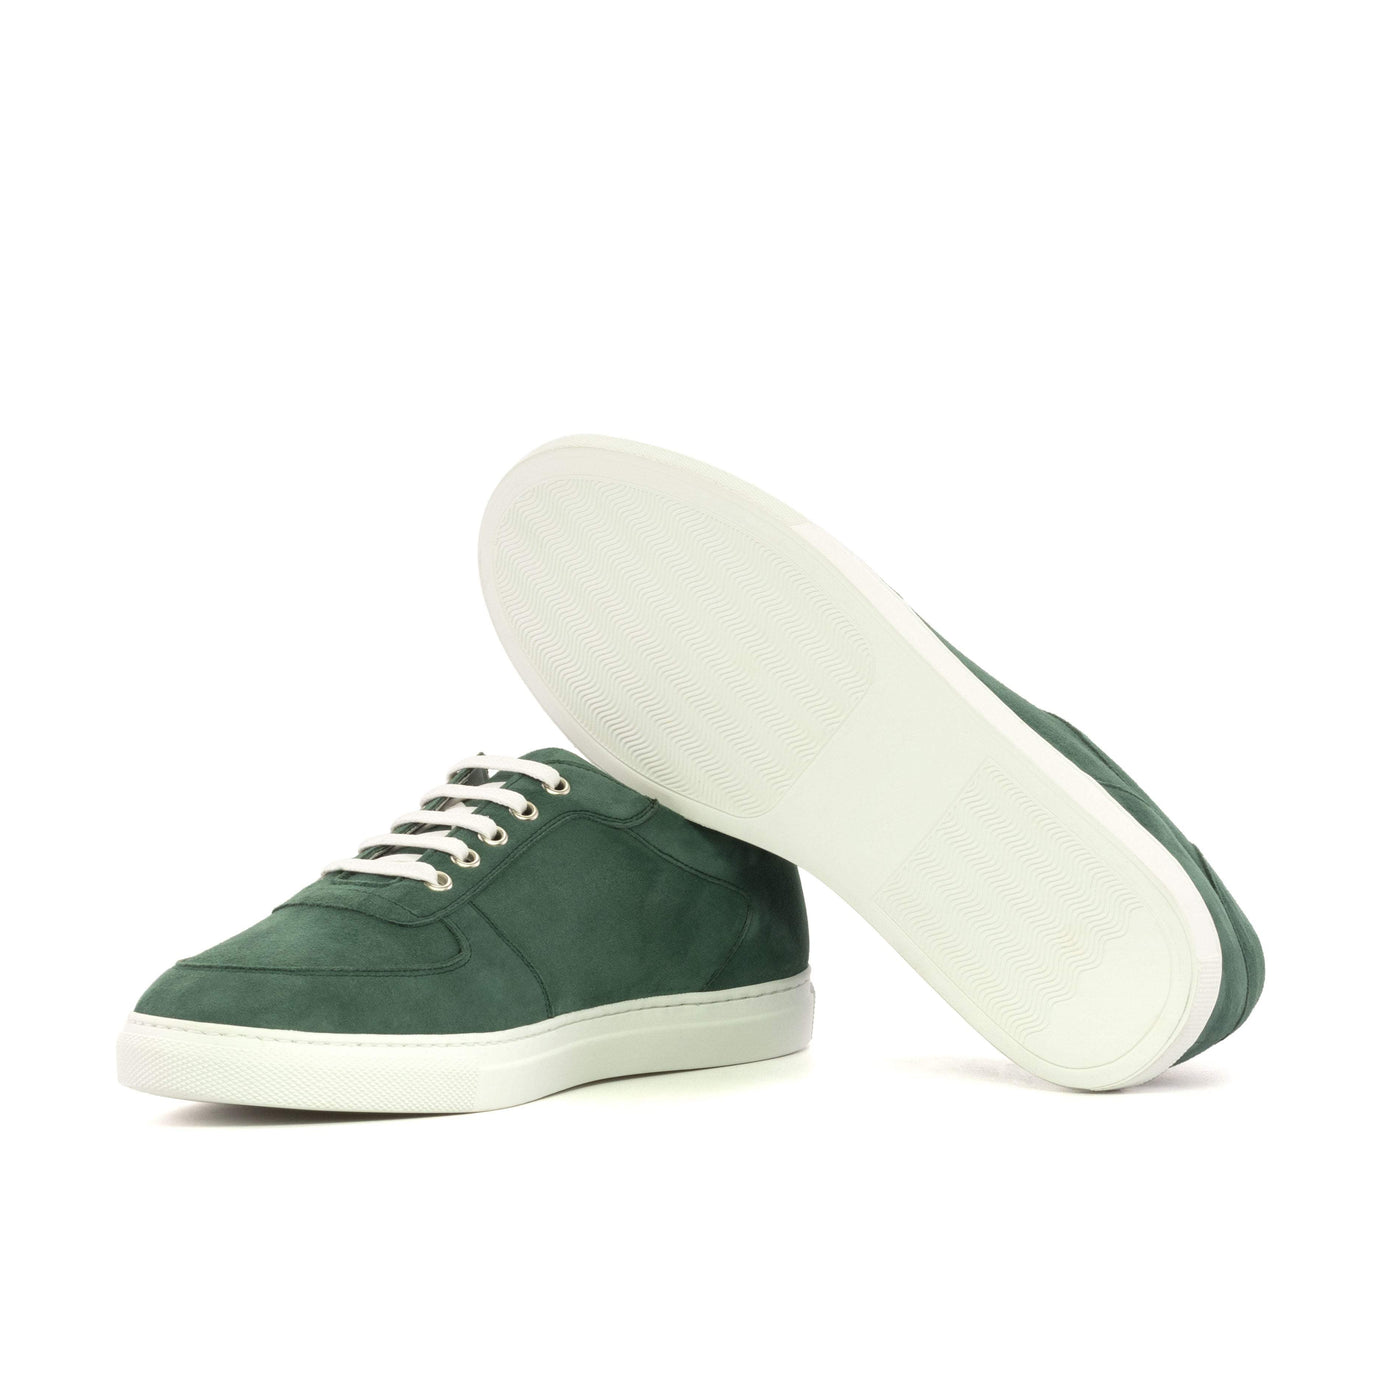 Men's Low Top Trainer Shoes Leather Green 5469 2- MERRIMIUM